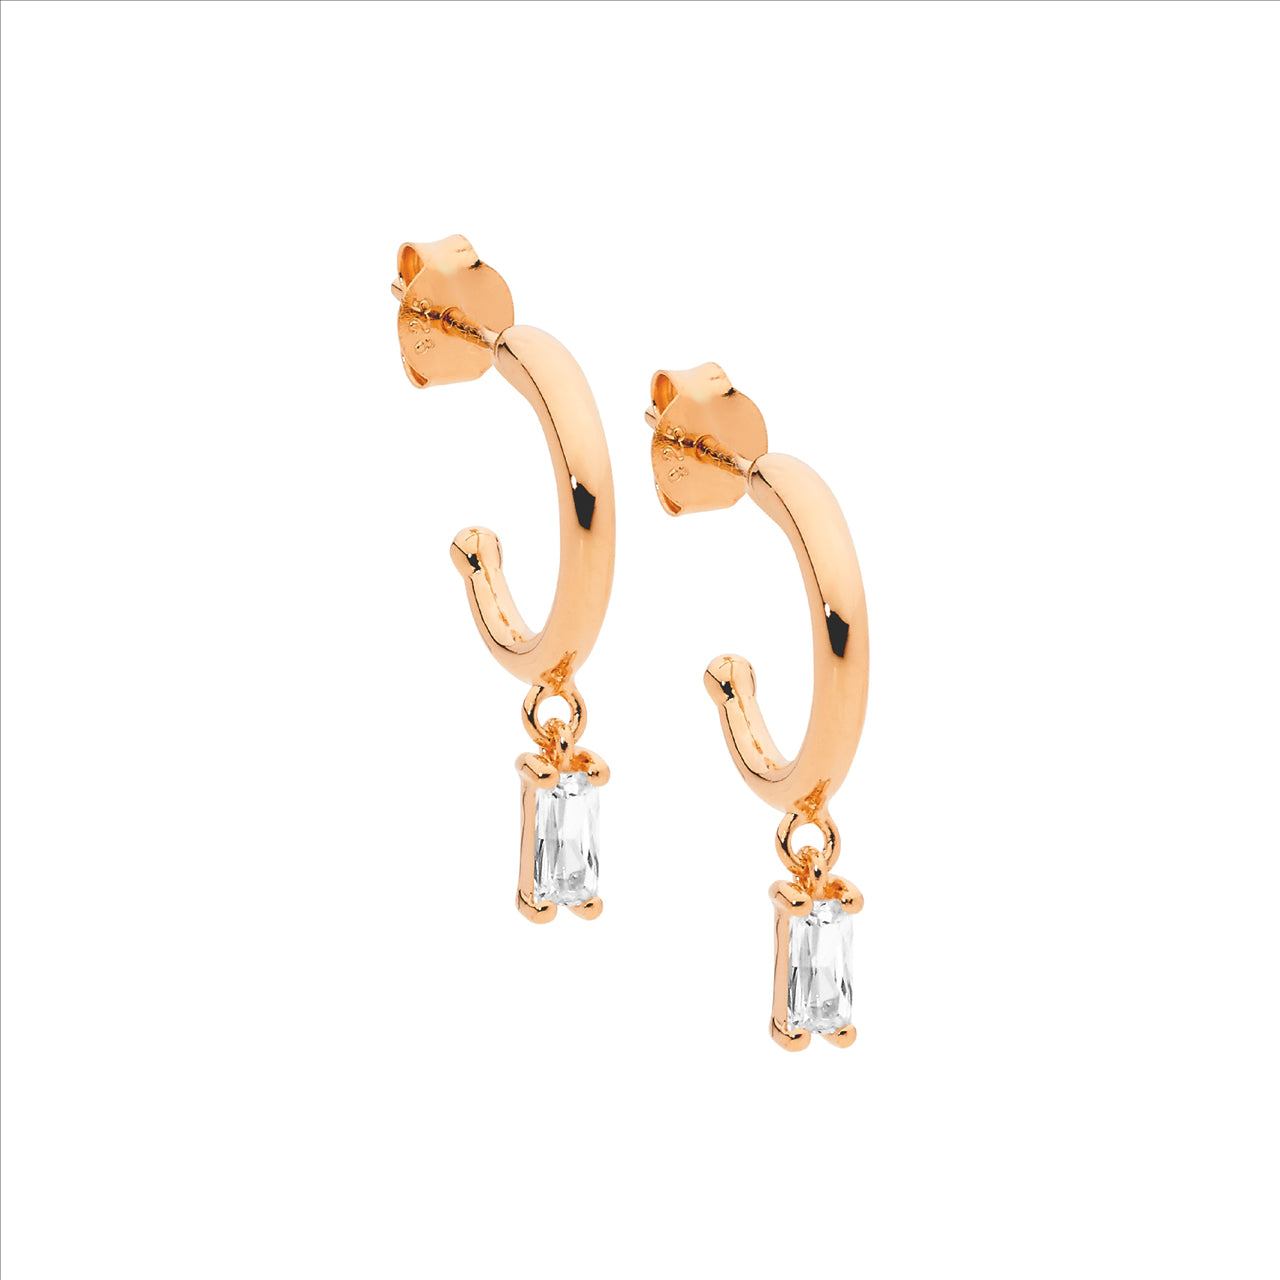 Baguette CZ semi hoop earrings in rose gold over sterling silver